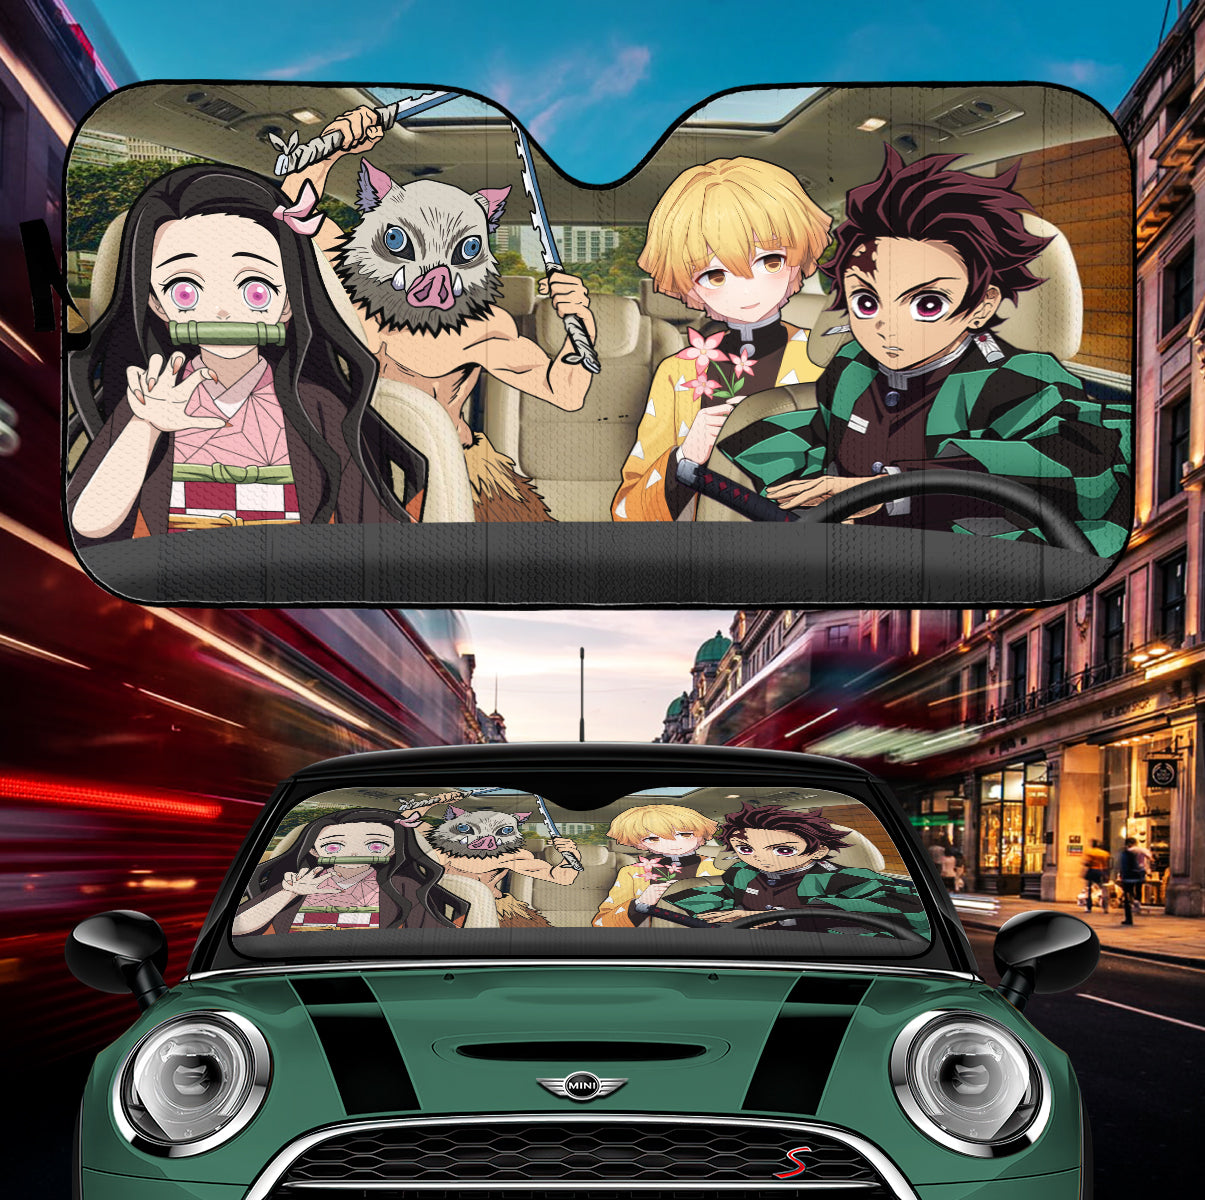 Tanjiro Nezuko Zenitsu Inosuke Demon Slayer Anime Driving Car Auto Sunshades Nearkii